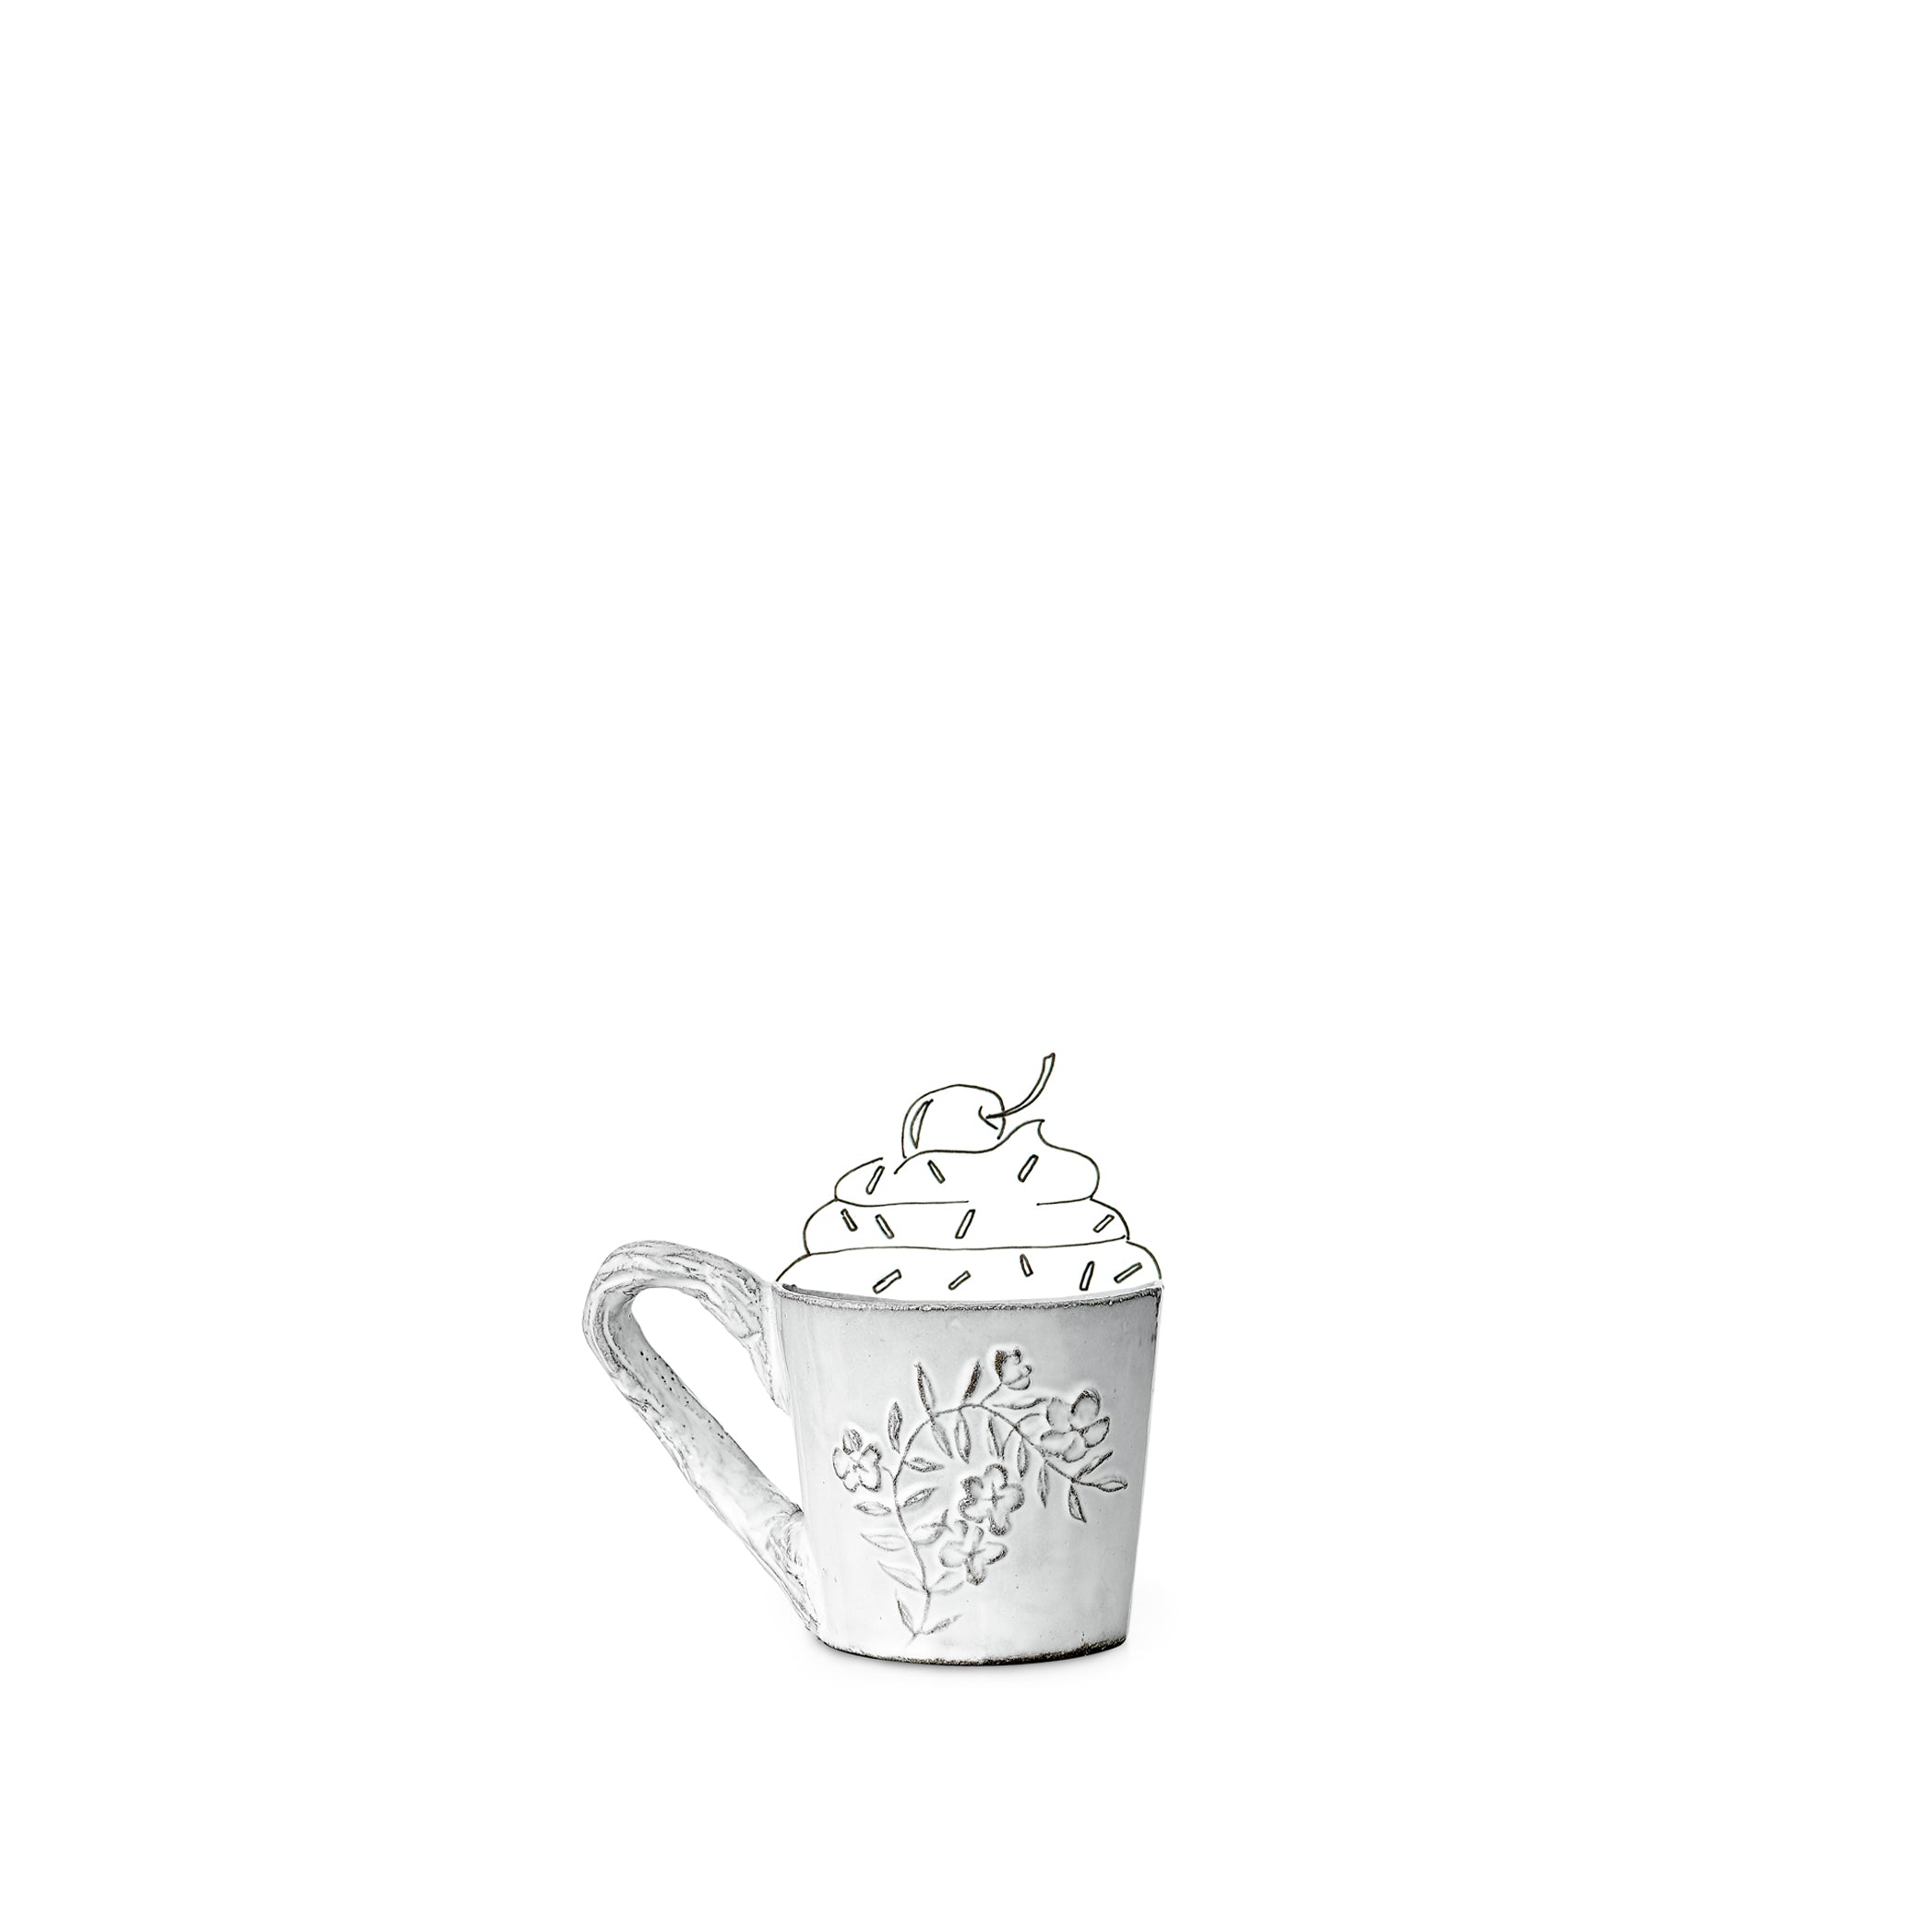 Fleurs Coffee Cup with Small Handle by Astier de Villatte, 9.5cm